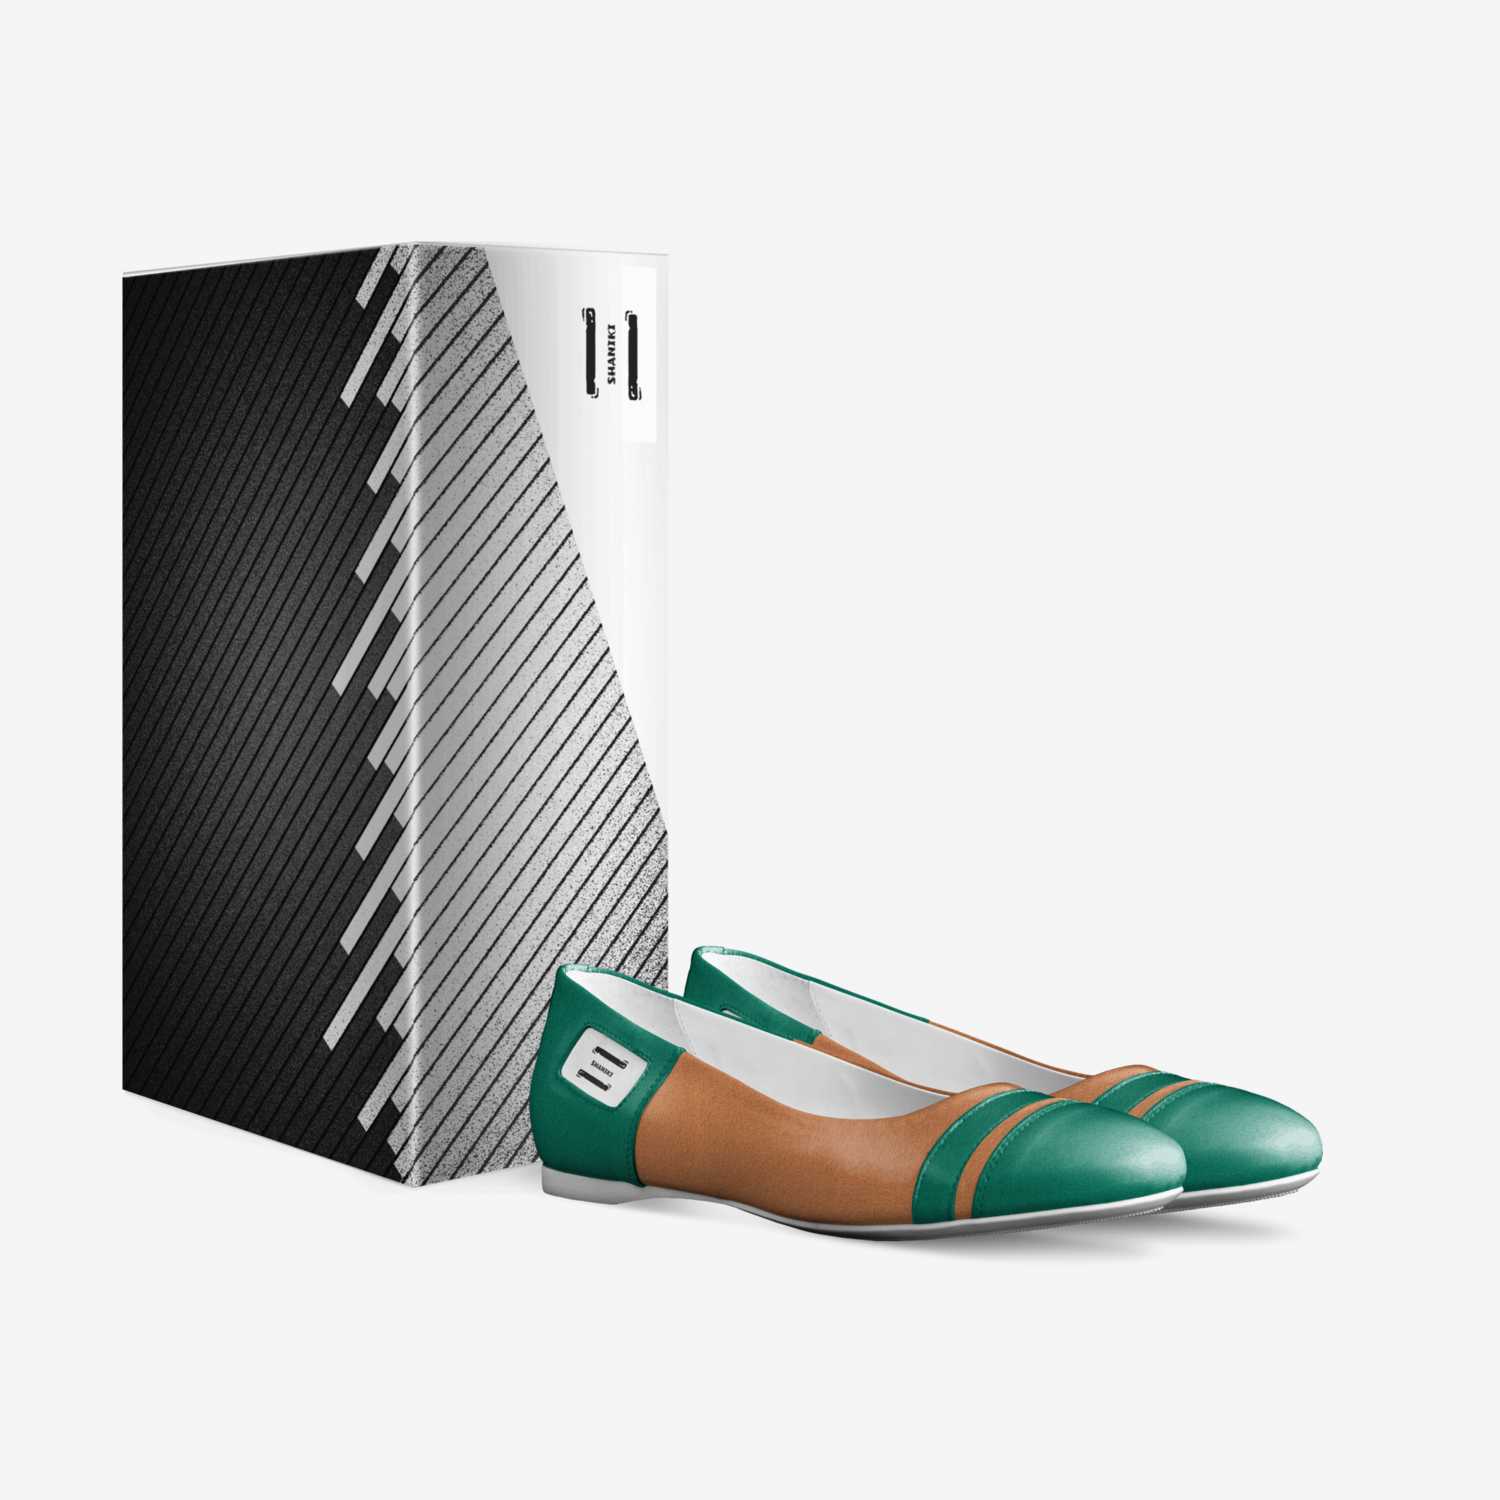 shaniki custom made in Italy shoes by Shaniki Smith | Box view